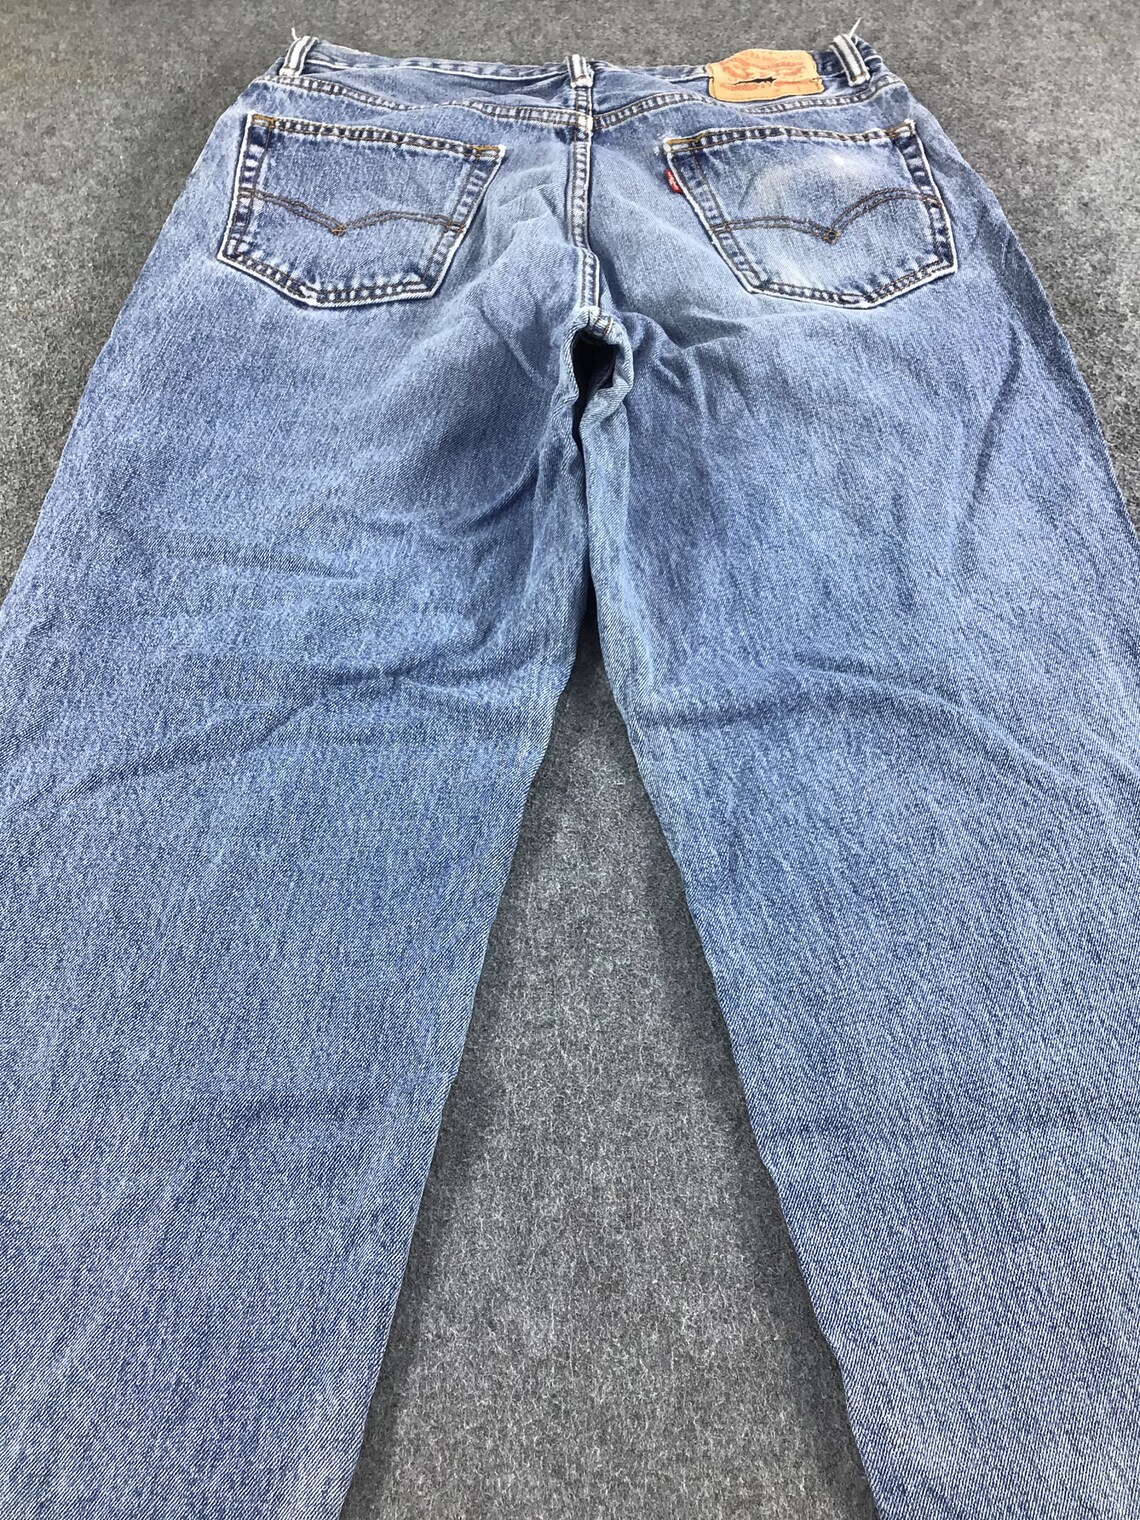 Vintage Levis 560 Jeans Light Wash Denim 34x28 | Etsy